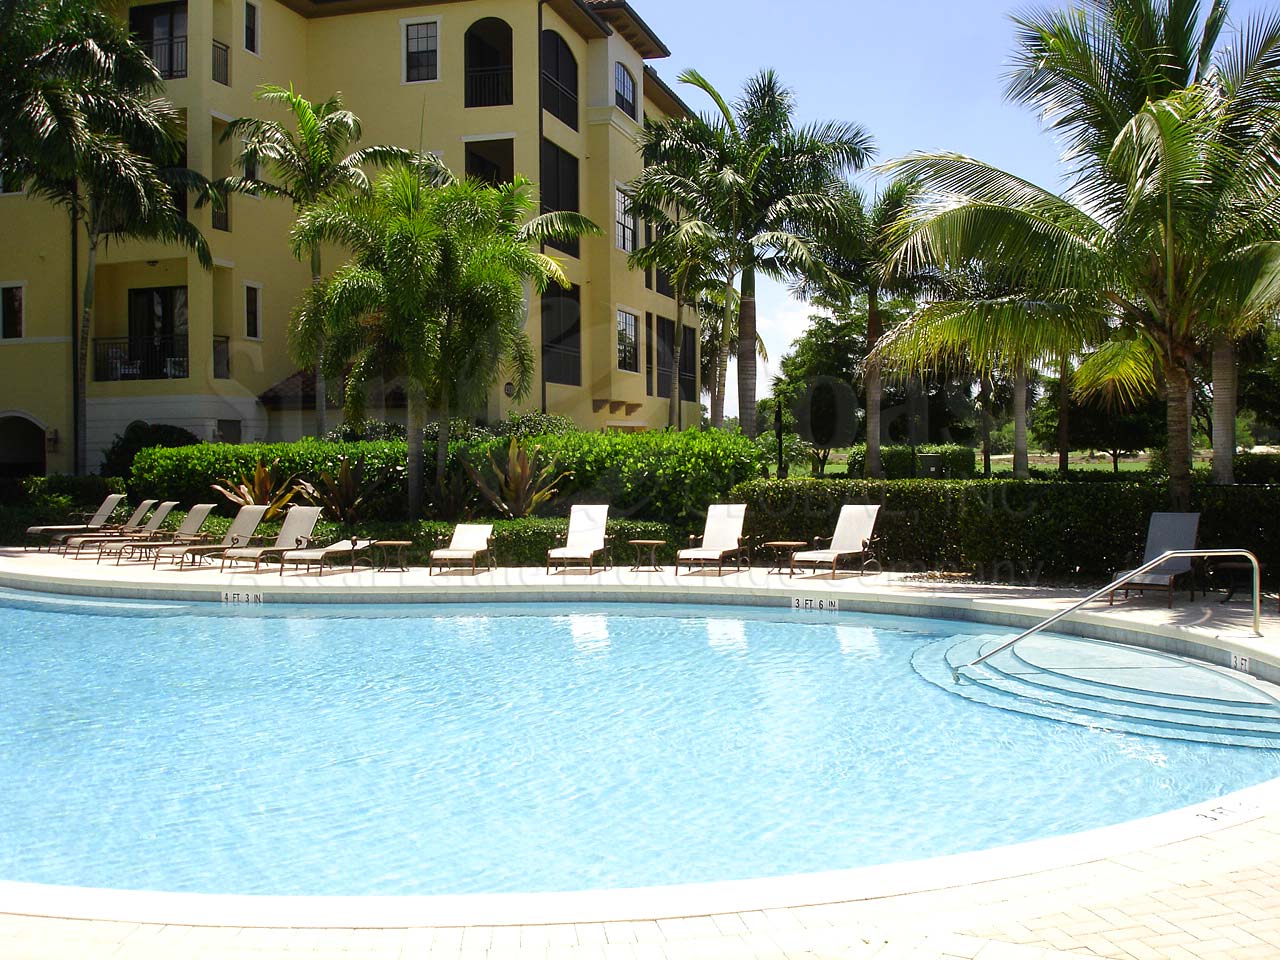 Marquesa Royale Community Pool and Sun Deck Furnishings